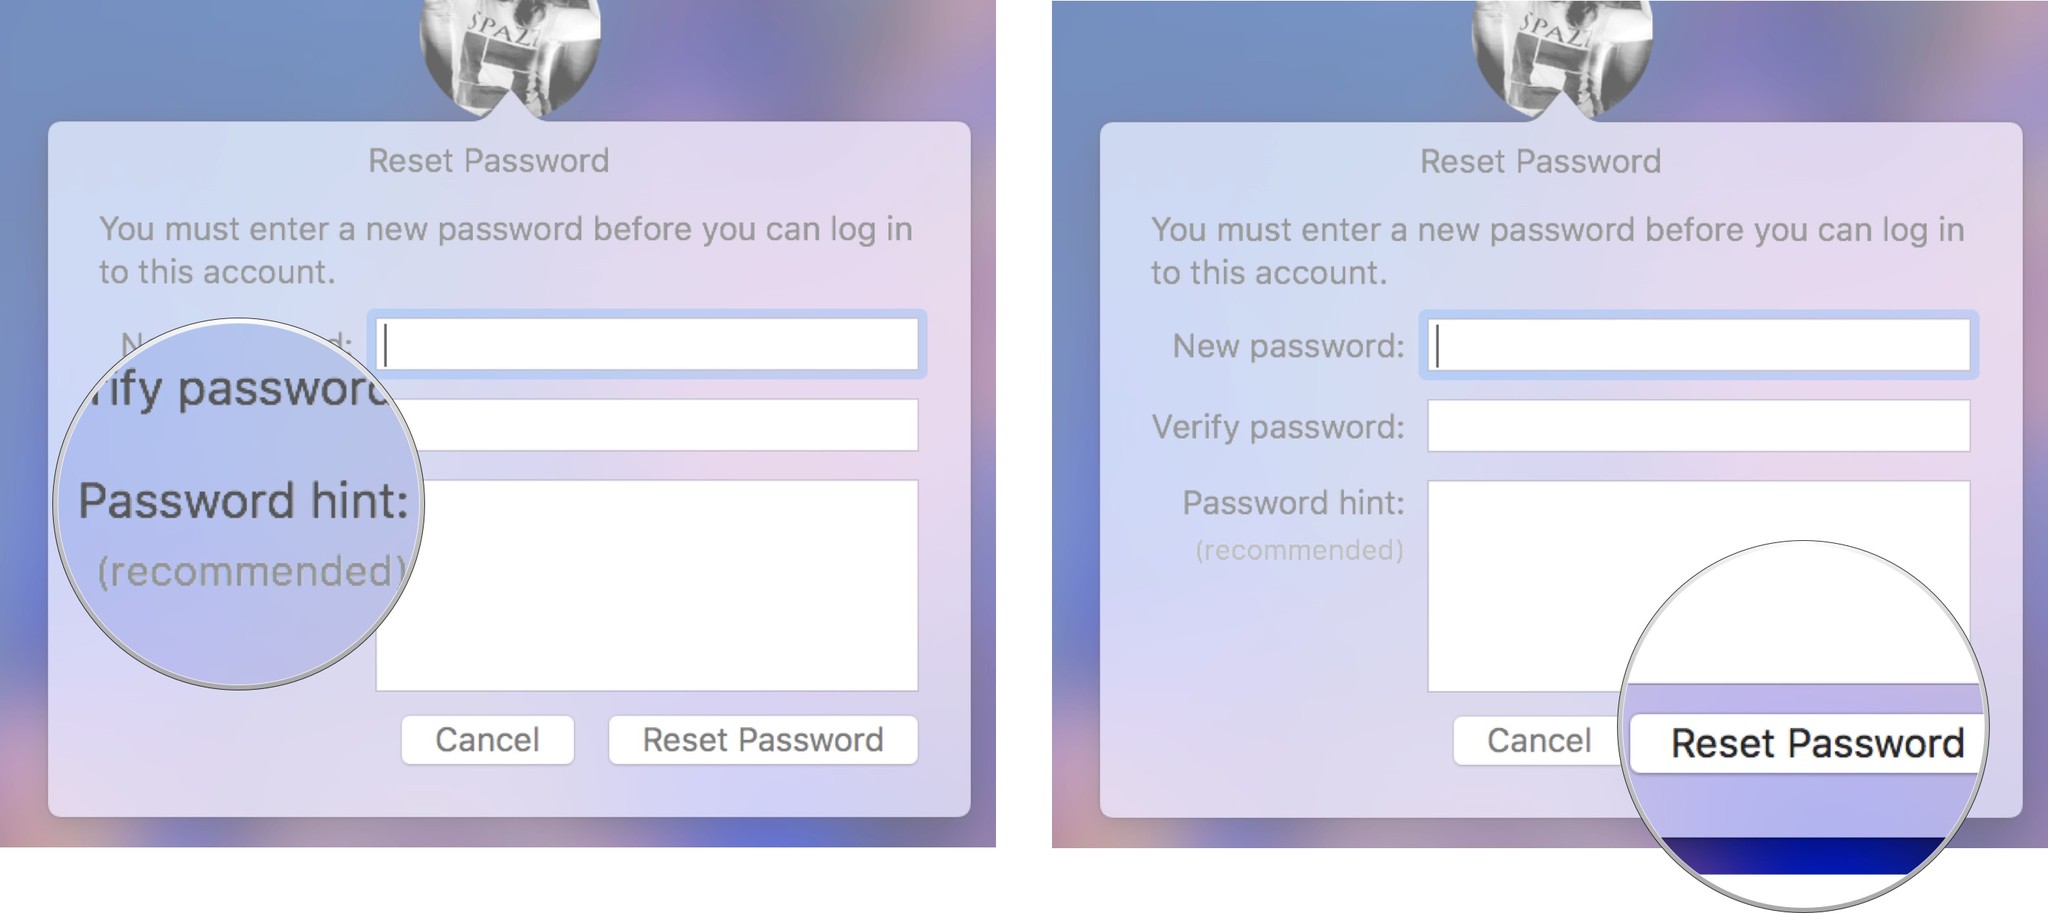 enter a password hint, then click reset password